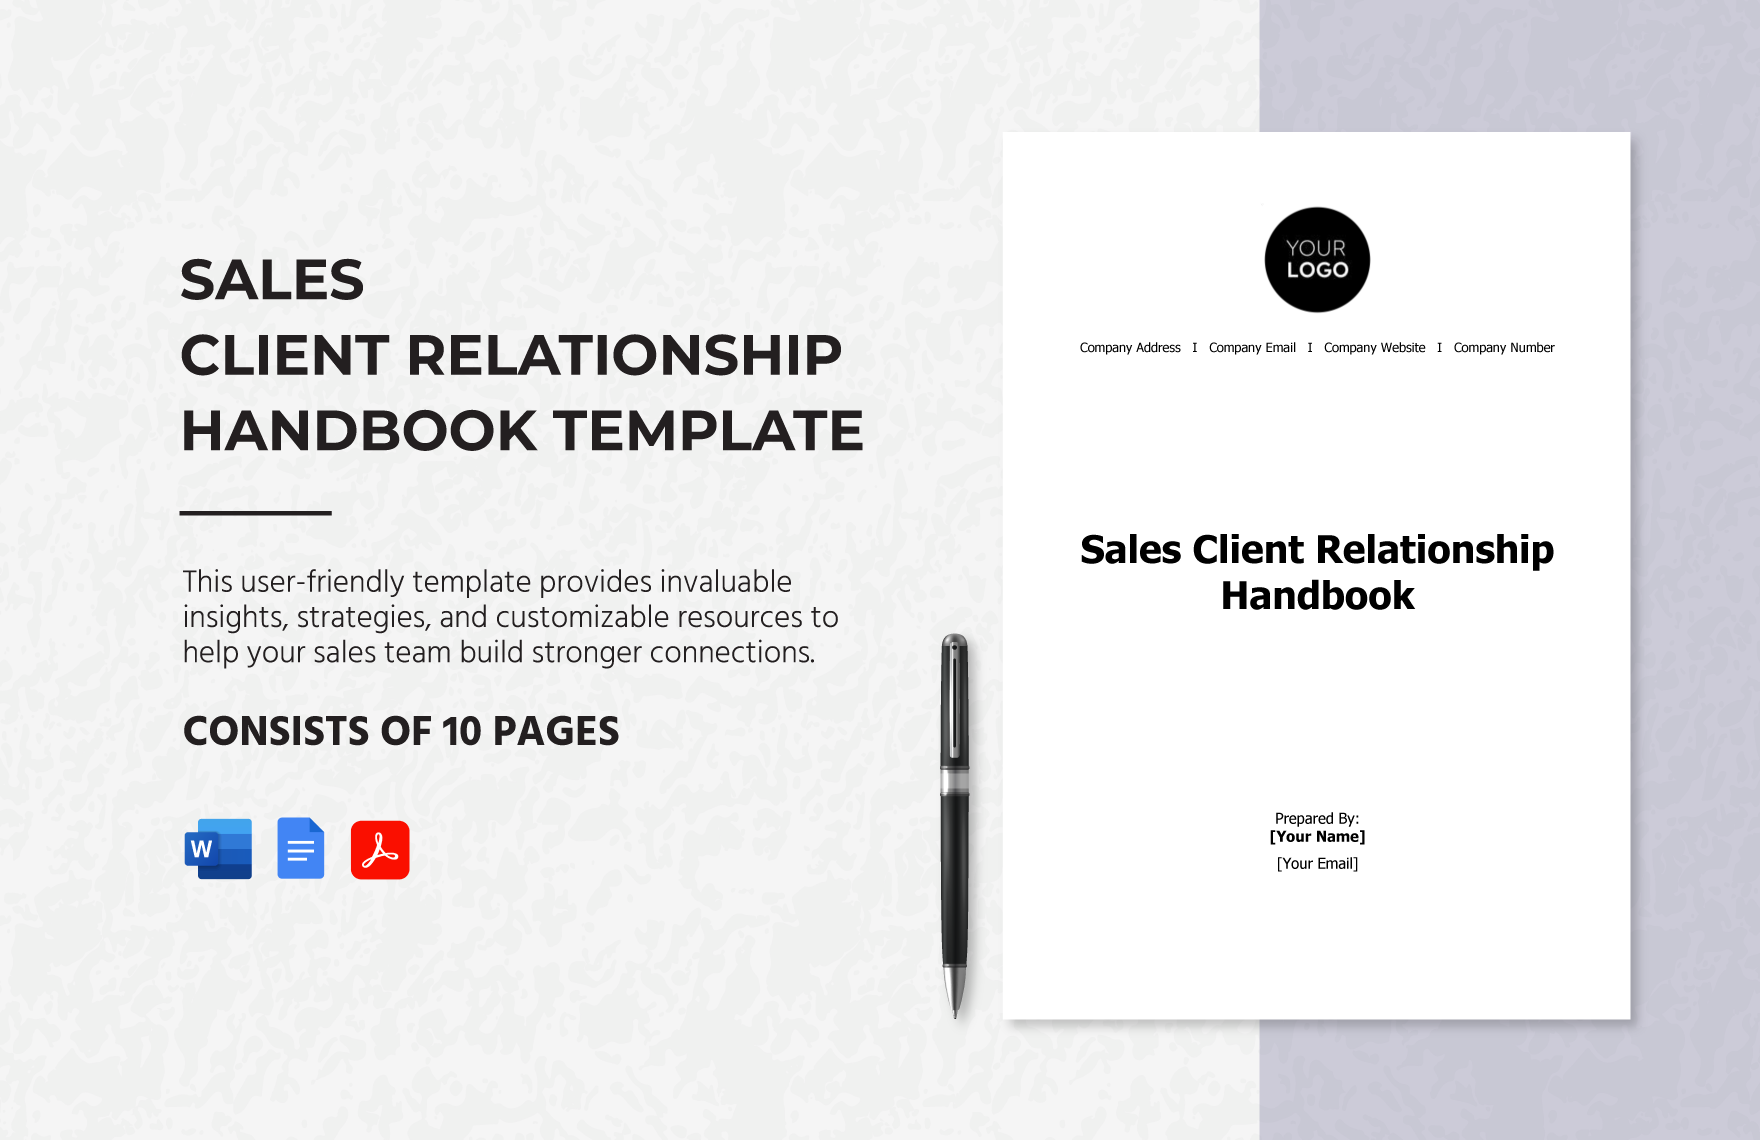 Sales Client Relationship Handbook Template in Word, Google Docs, PDF